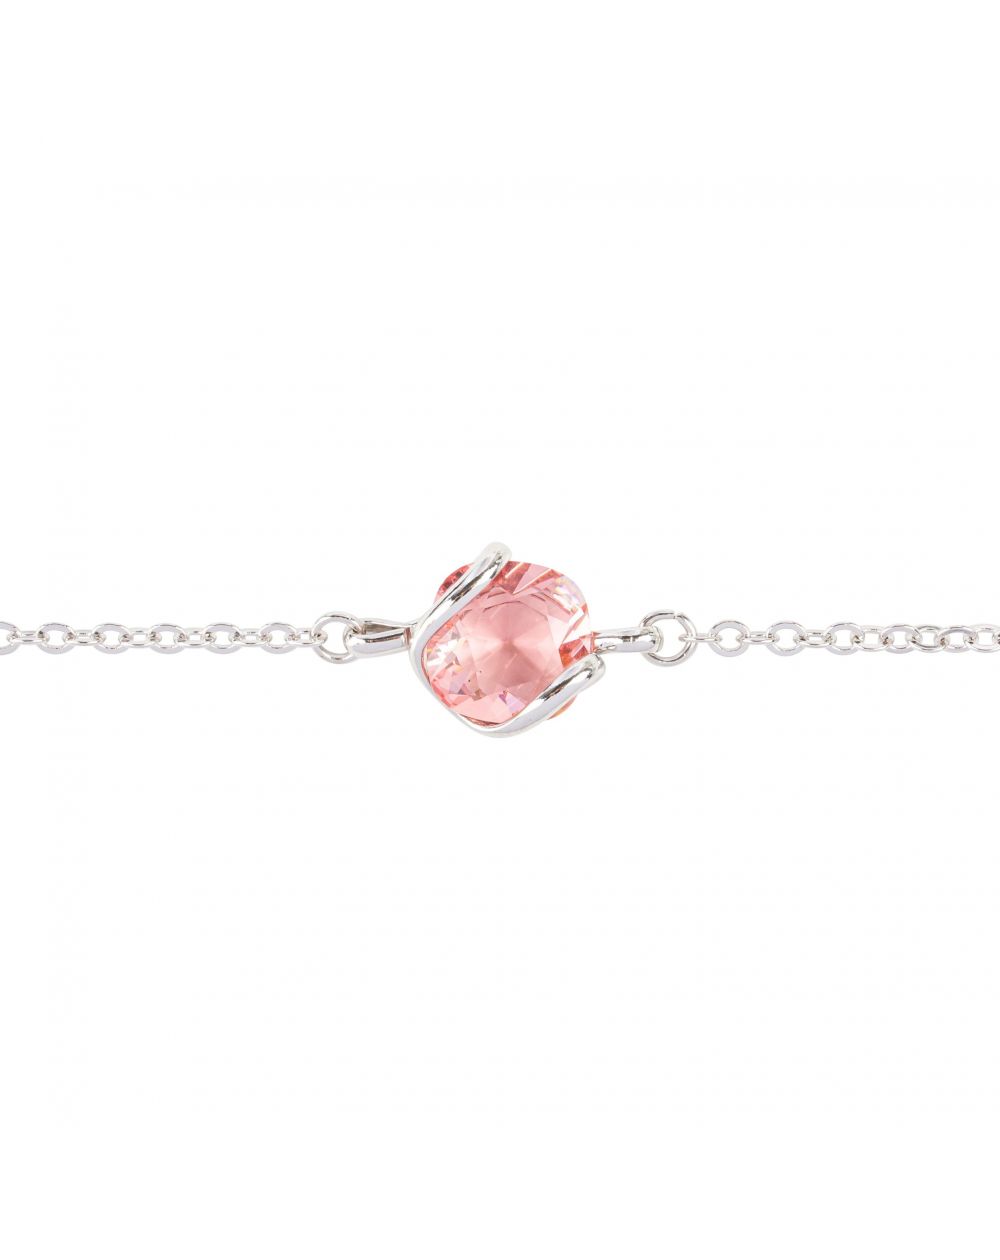 Andrea Marazzini bijoux - Bracelet cristal Swarovski Mini Peach